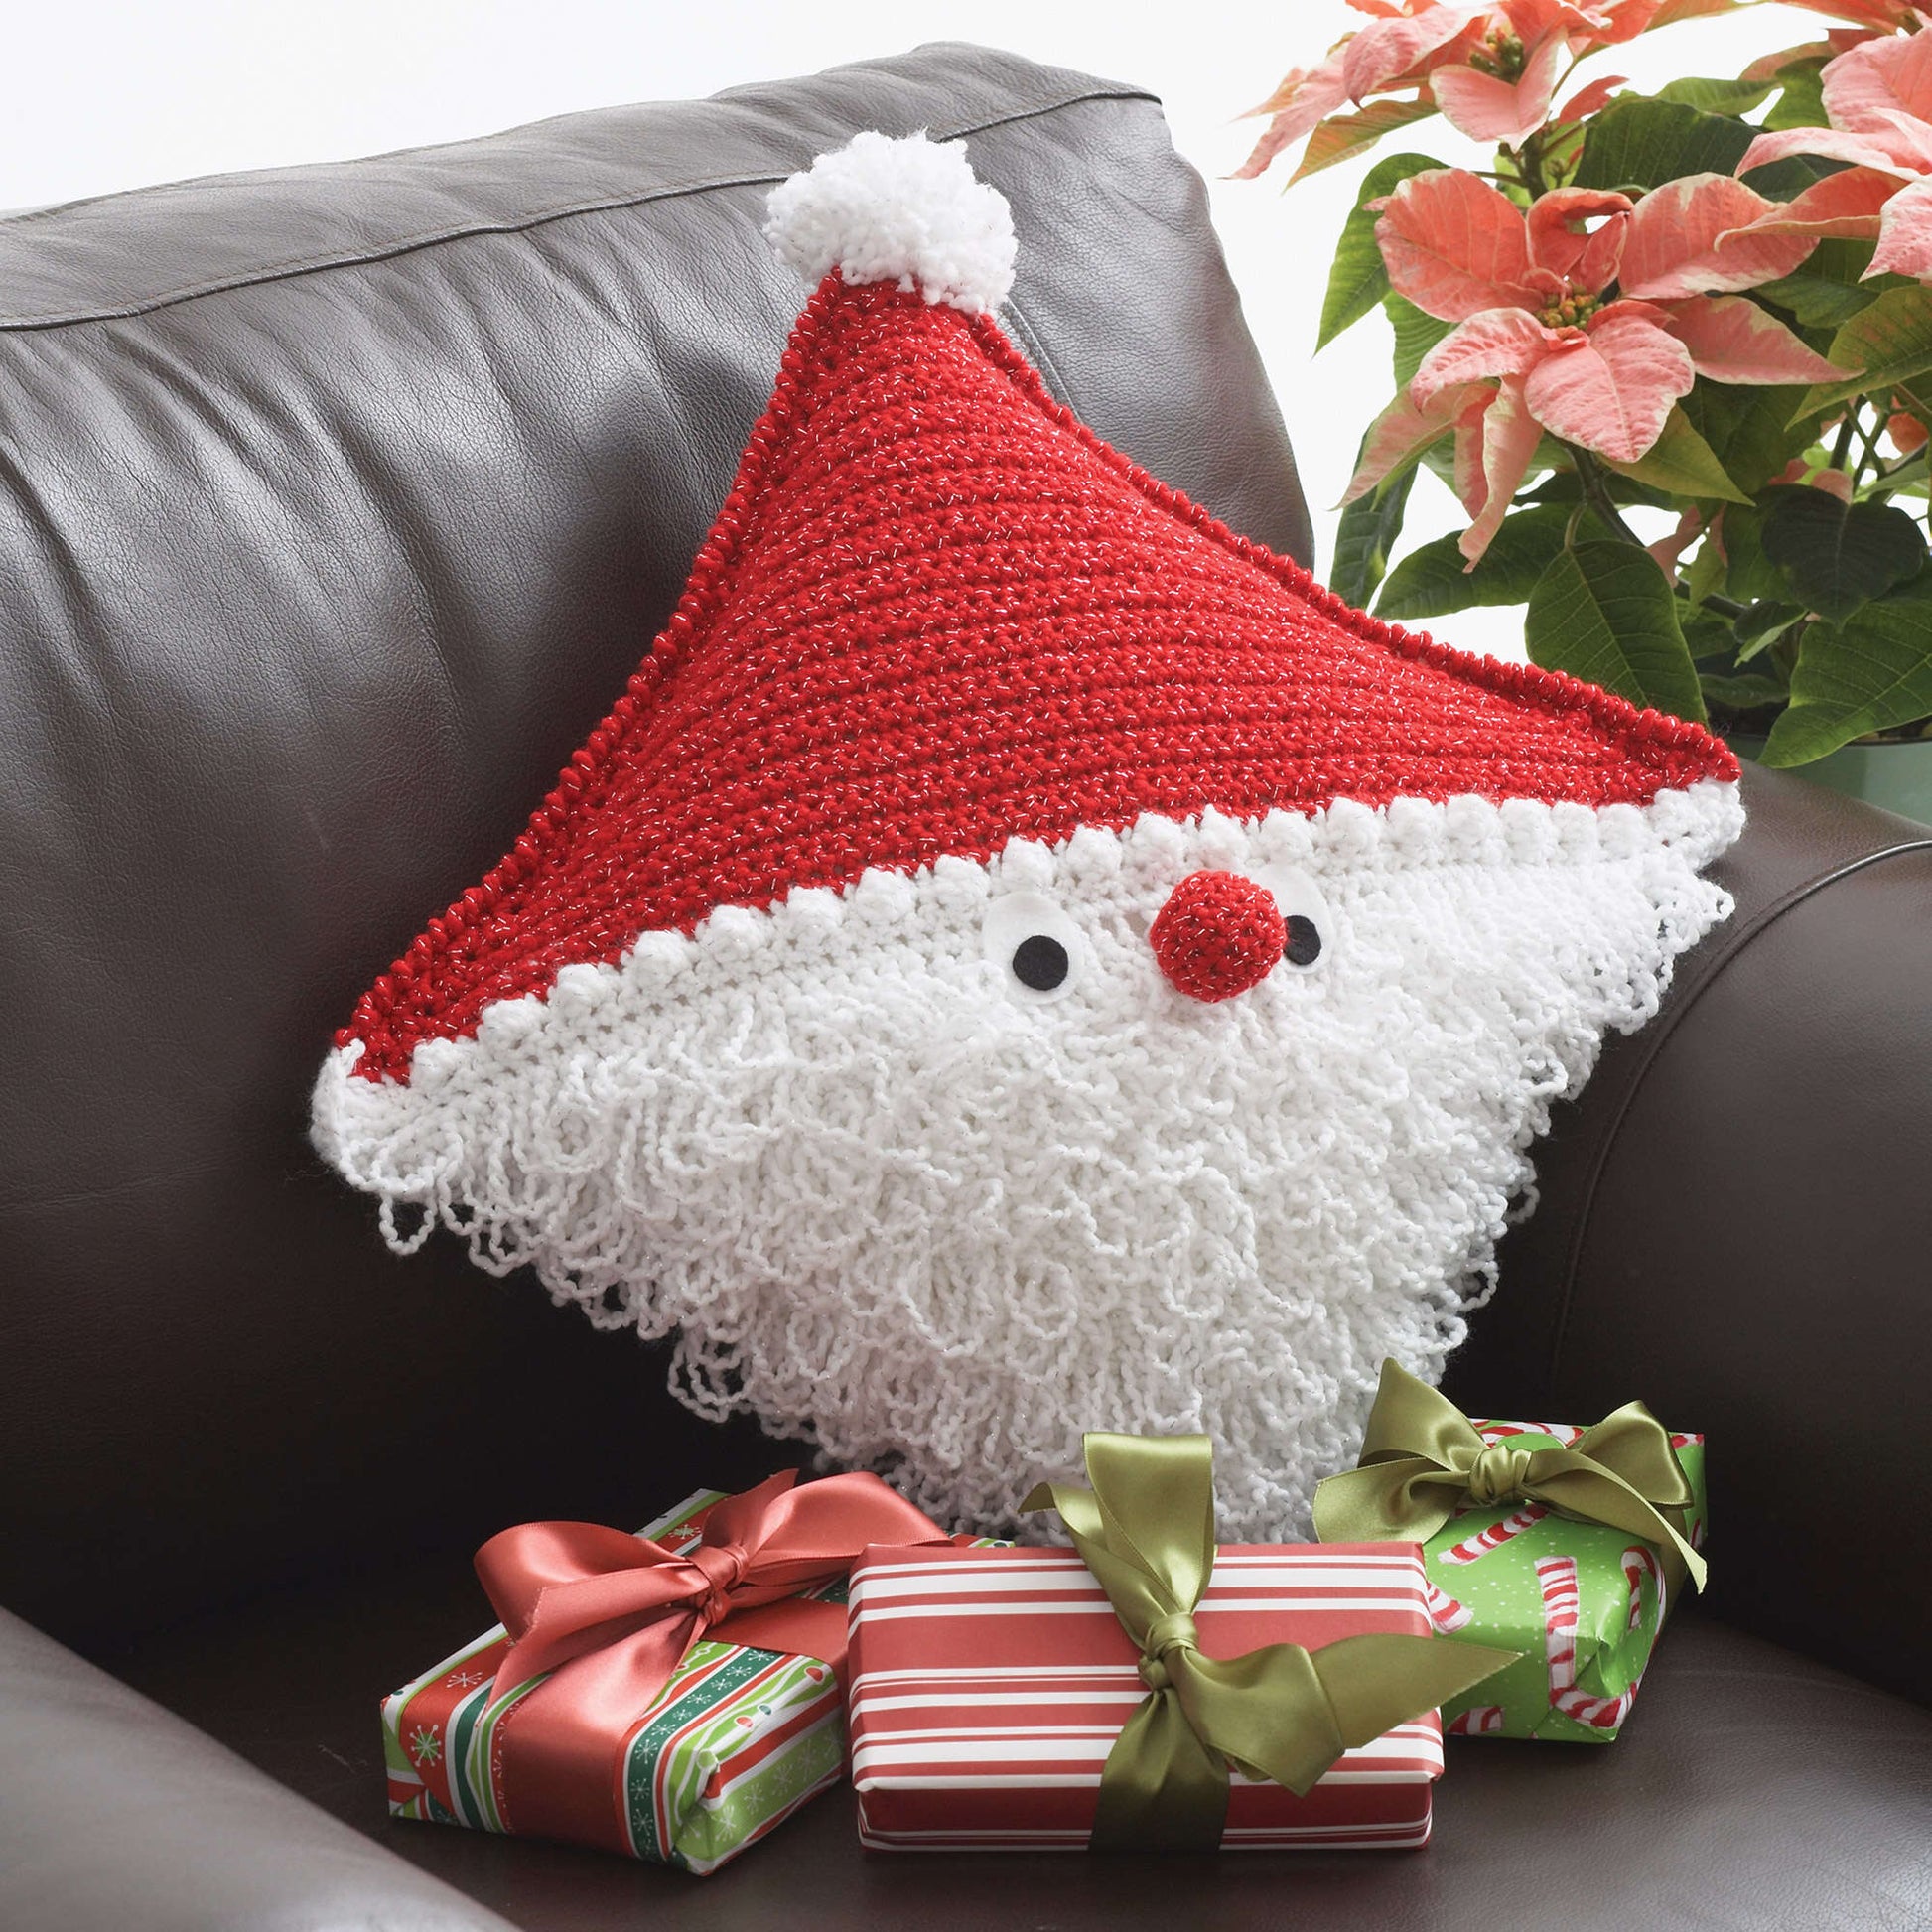 Bernat Santa Pillow Crochet Holiday made in Bernat Happy Holidays yarn